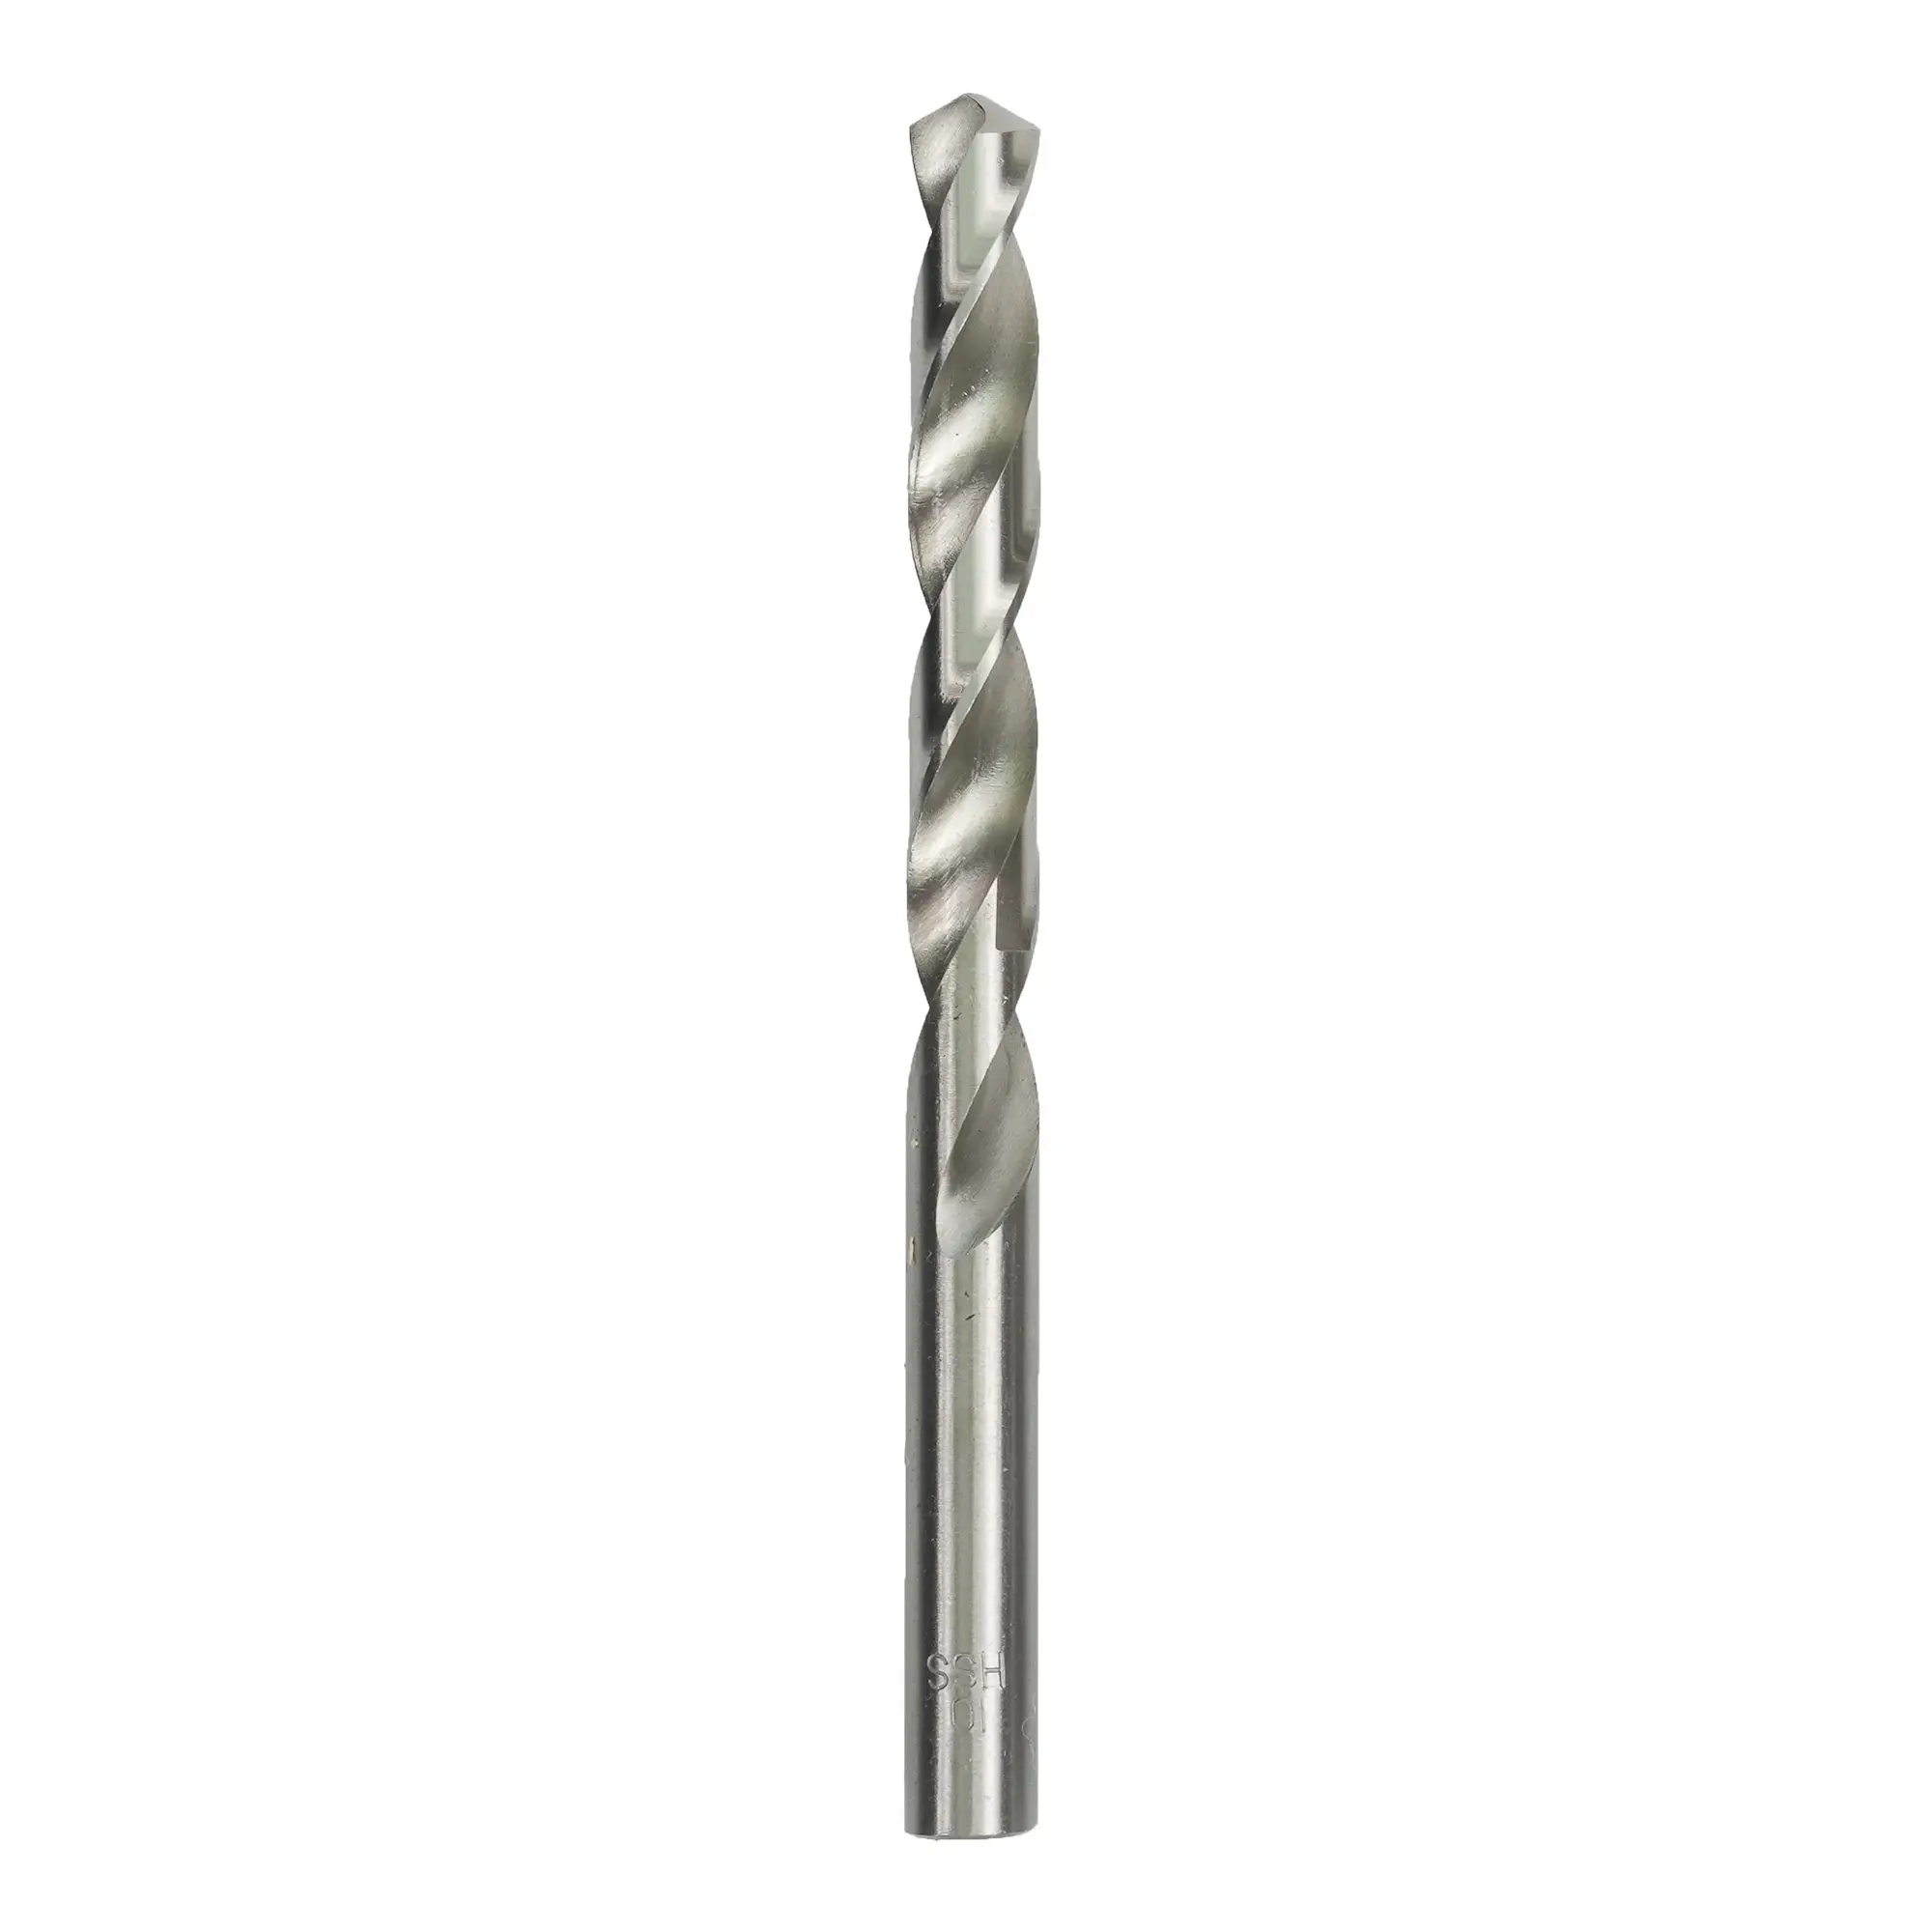 EZARC Power Tool Accessory HSS Drill Bits for Stainless Steel Metal Jobber Twist Drill Bit Set